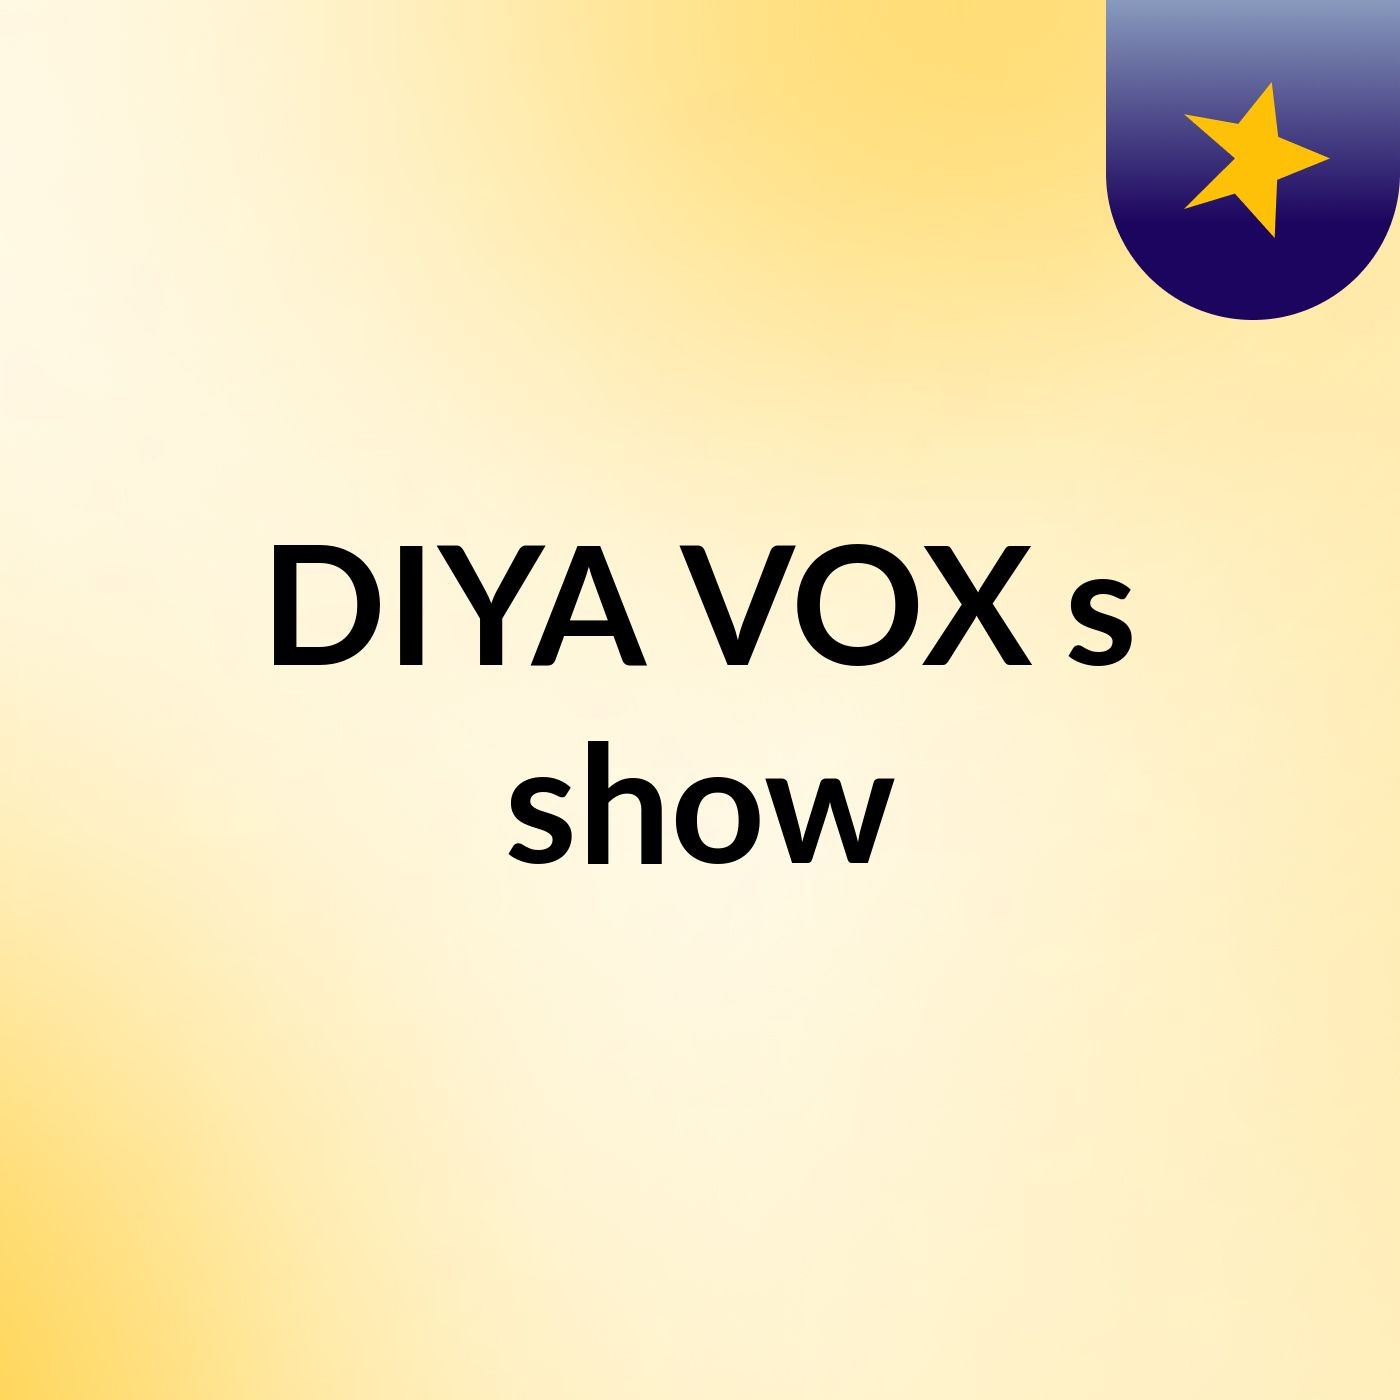 DIYA VOX's show